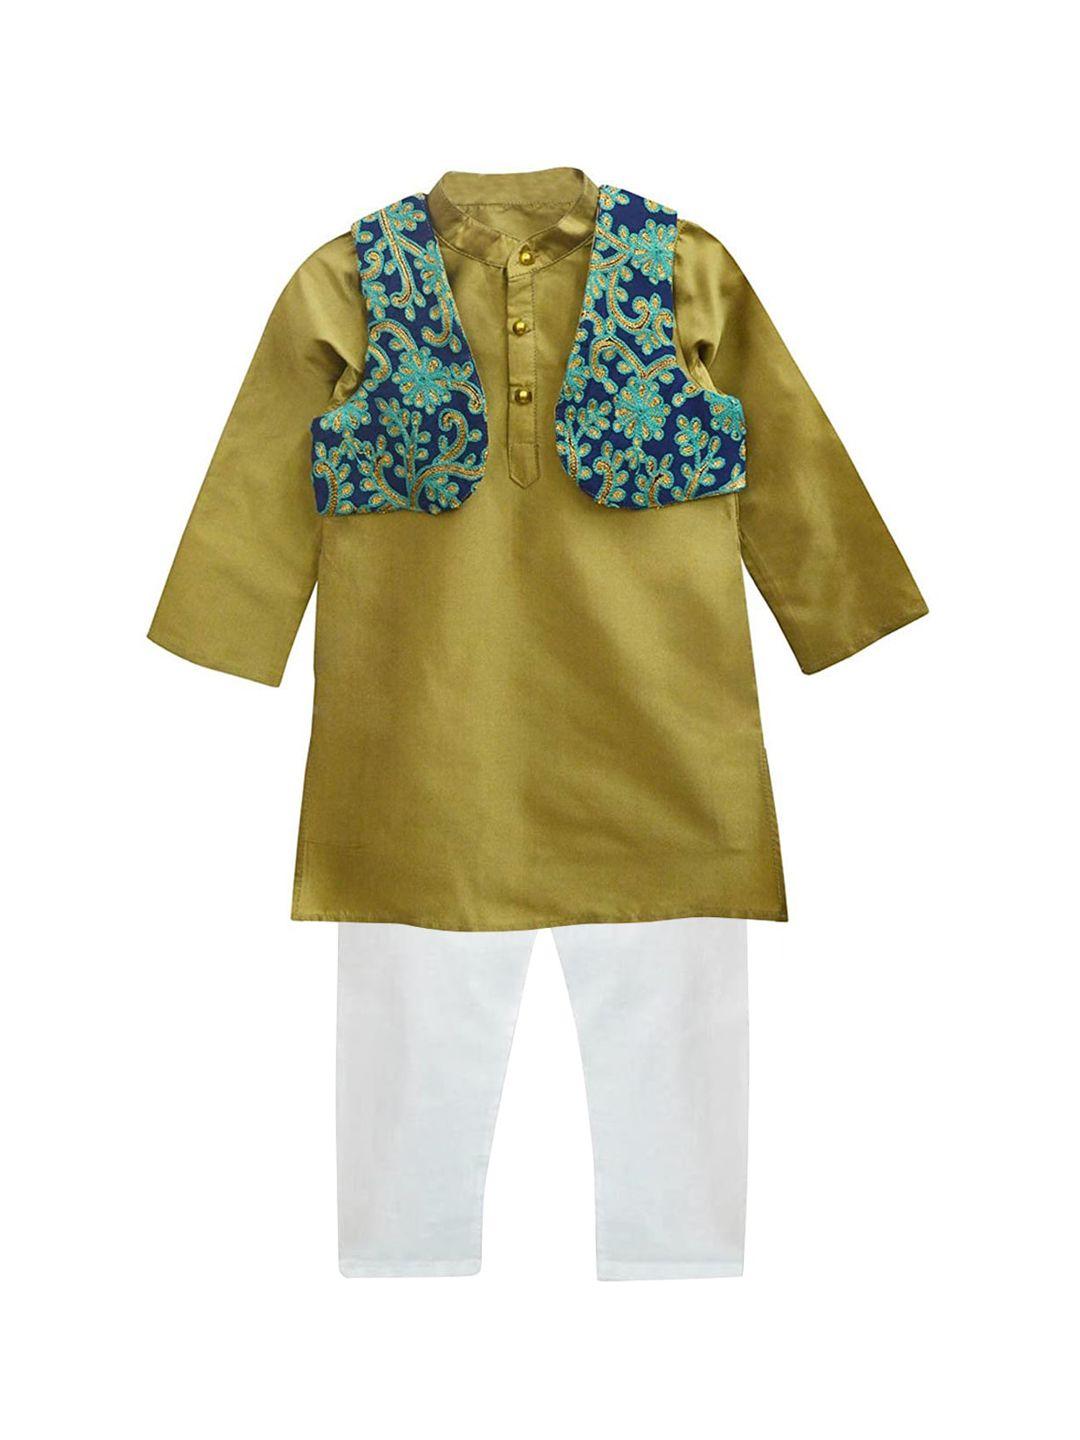 a t u n boys gold-toned empire thread work kurta pyjamas with jacket